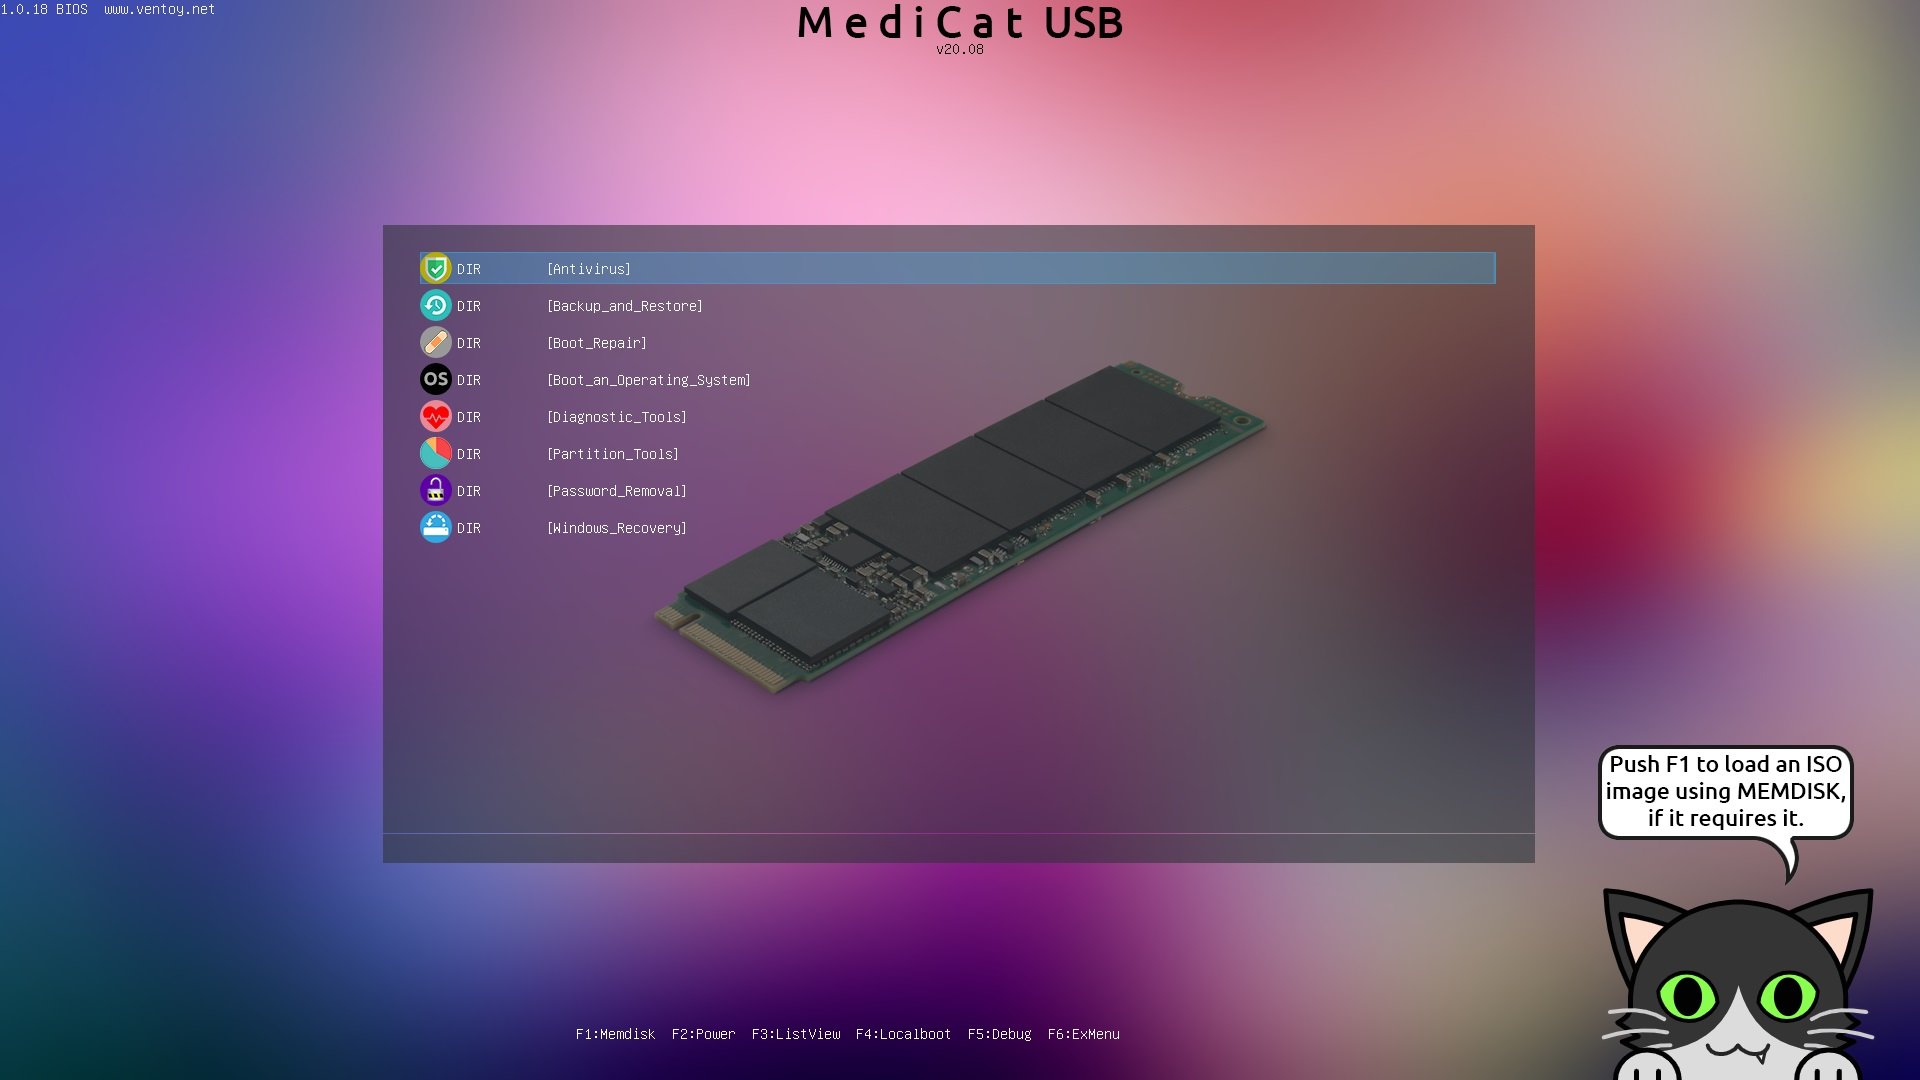 MediCat USB by Jayro | GBAtemp.net - The Independent Video Game Community